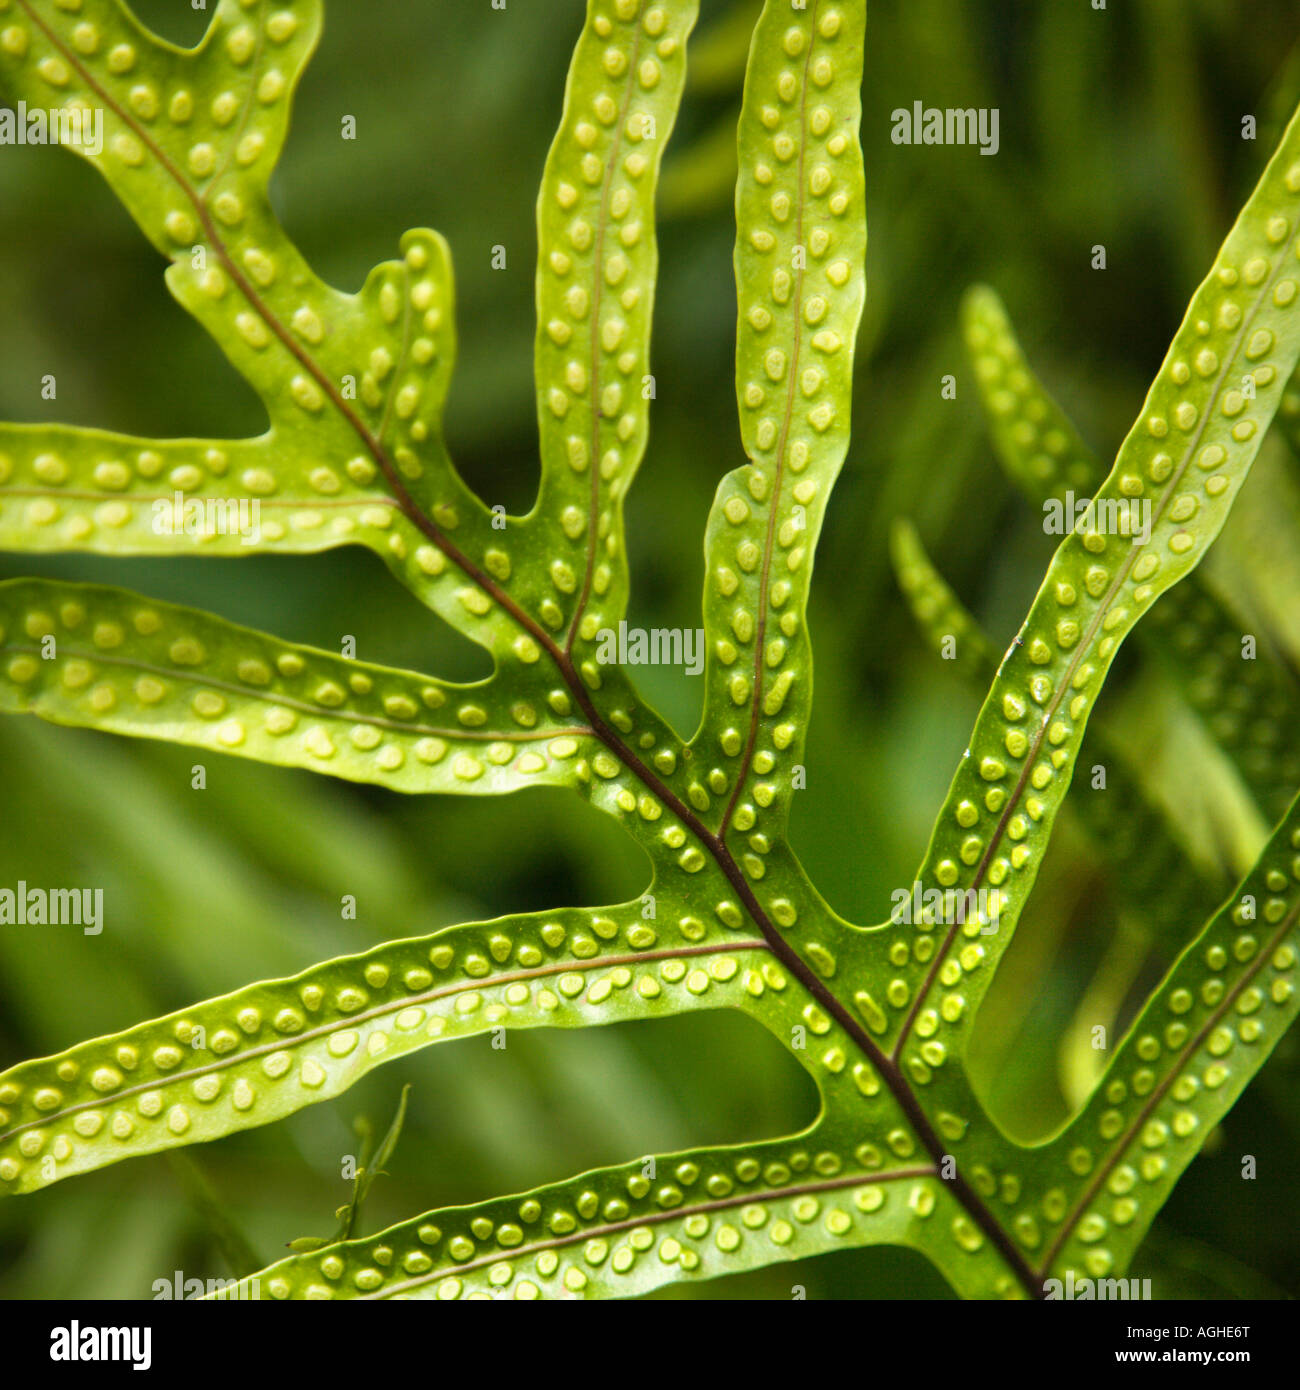 Close up of fern leaf with bumpy immature sporangia Stock Photo